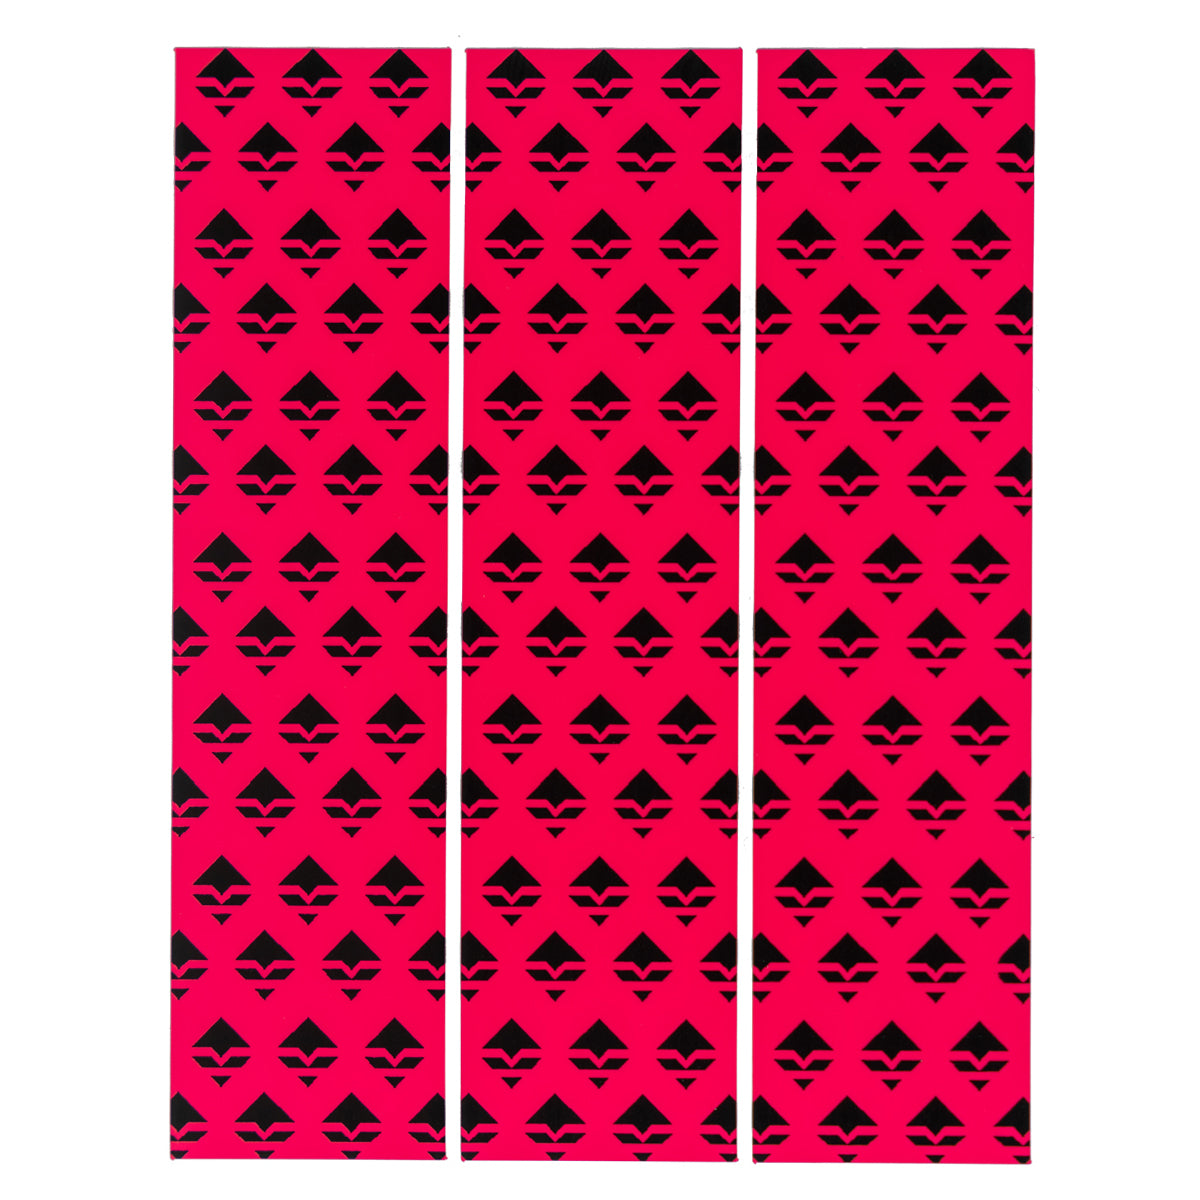 GOHUNT Custom Arrow Wrap Option 7 - 12 Count in Pink by GOHUNT | Lone Peak Outdoors - GOHUNT Shop